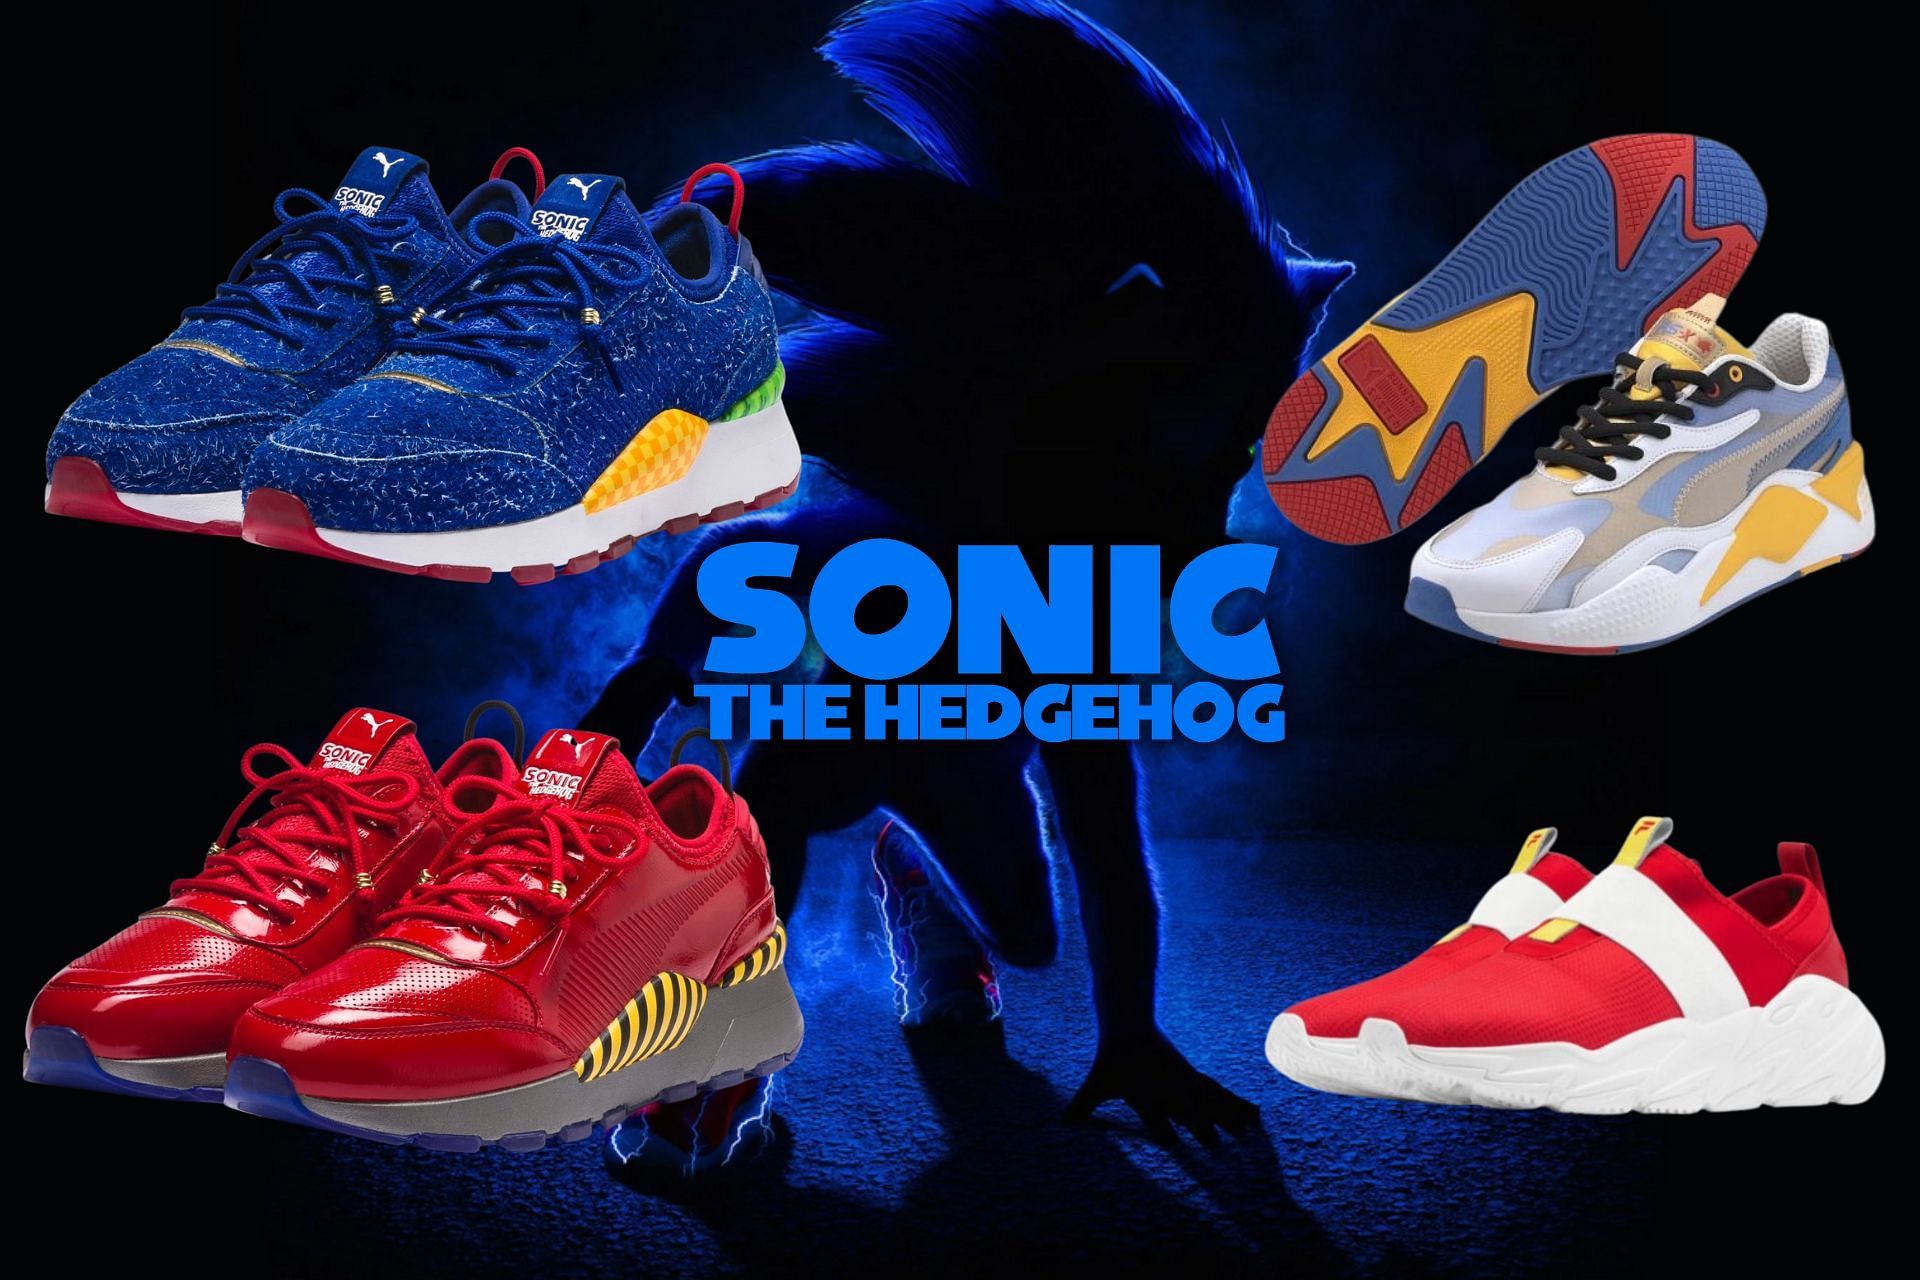 The best Sonic the Hedgehog sneakers released over the years (Image via Sportskeeda)